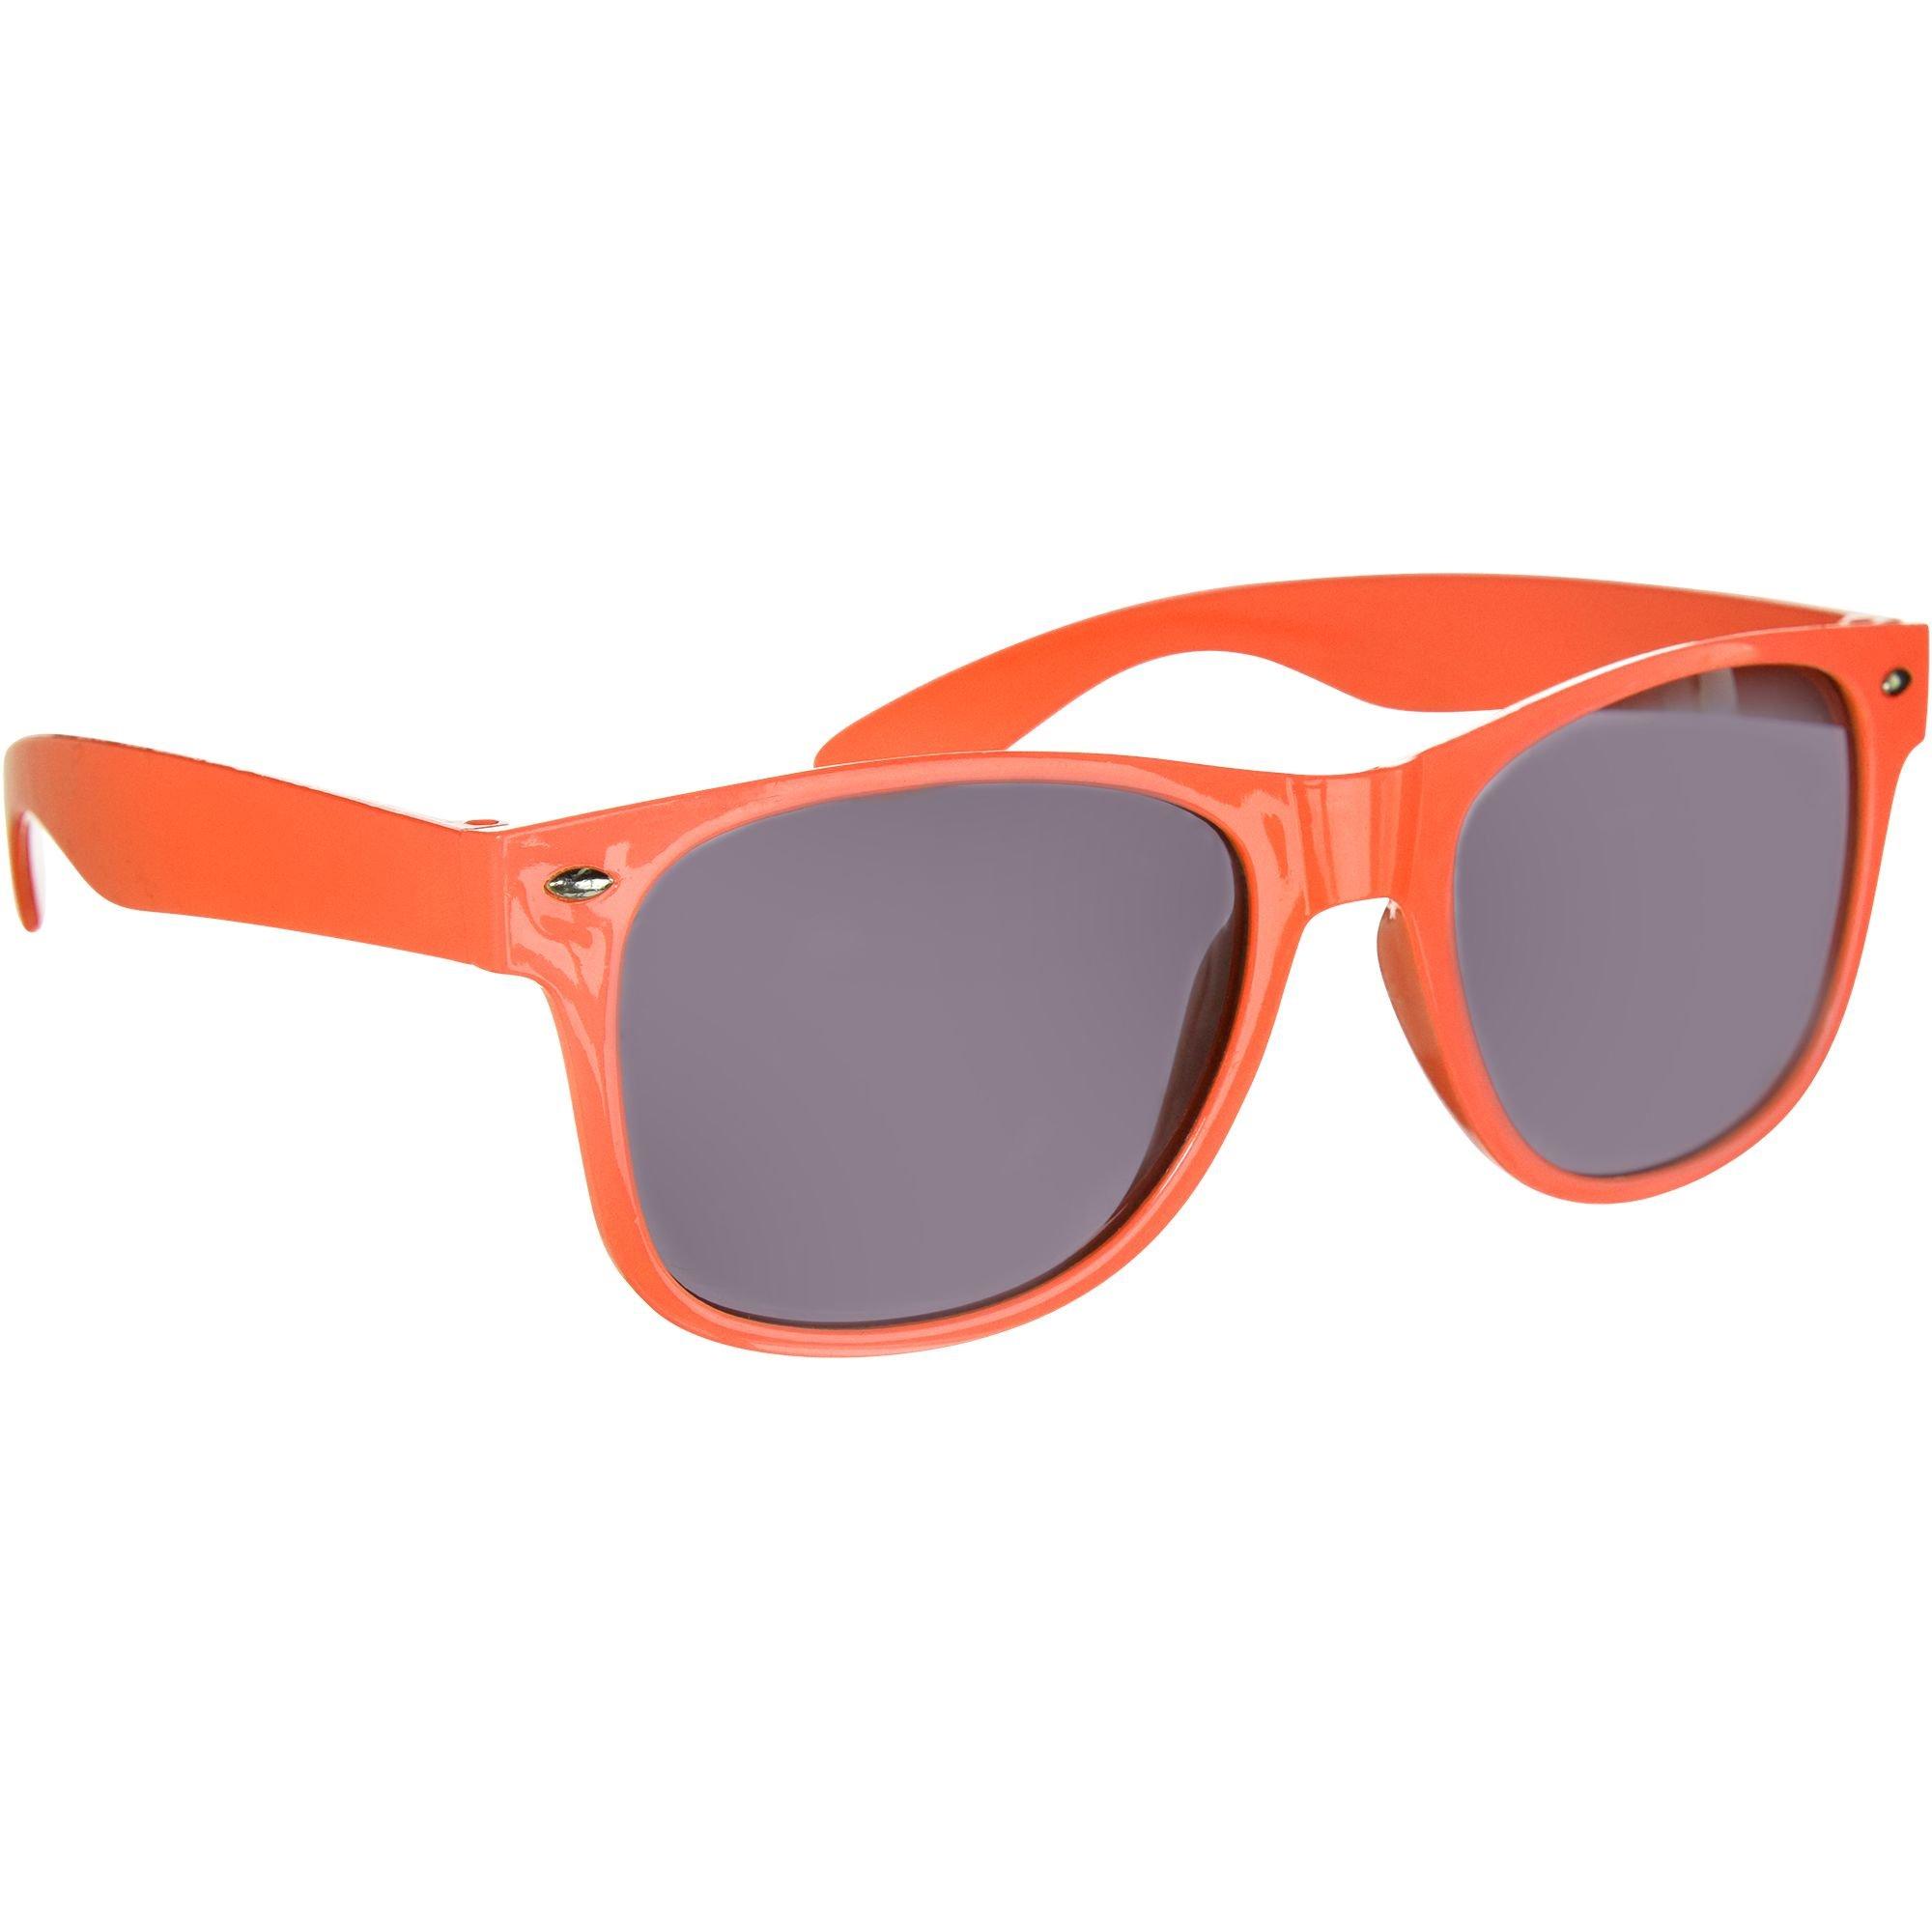 Classic Orange Frame Sunglasses